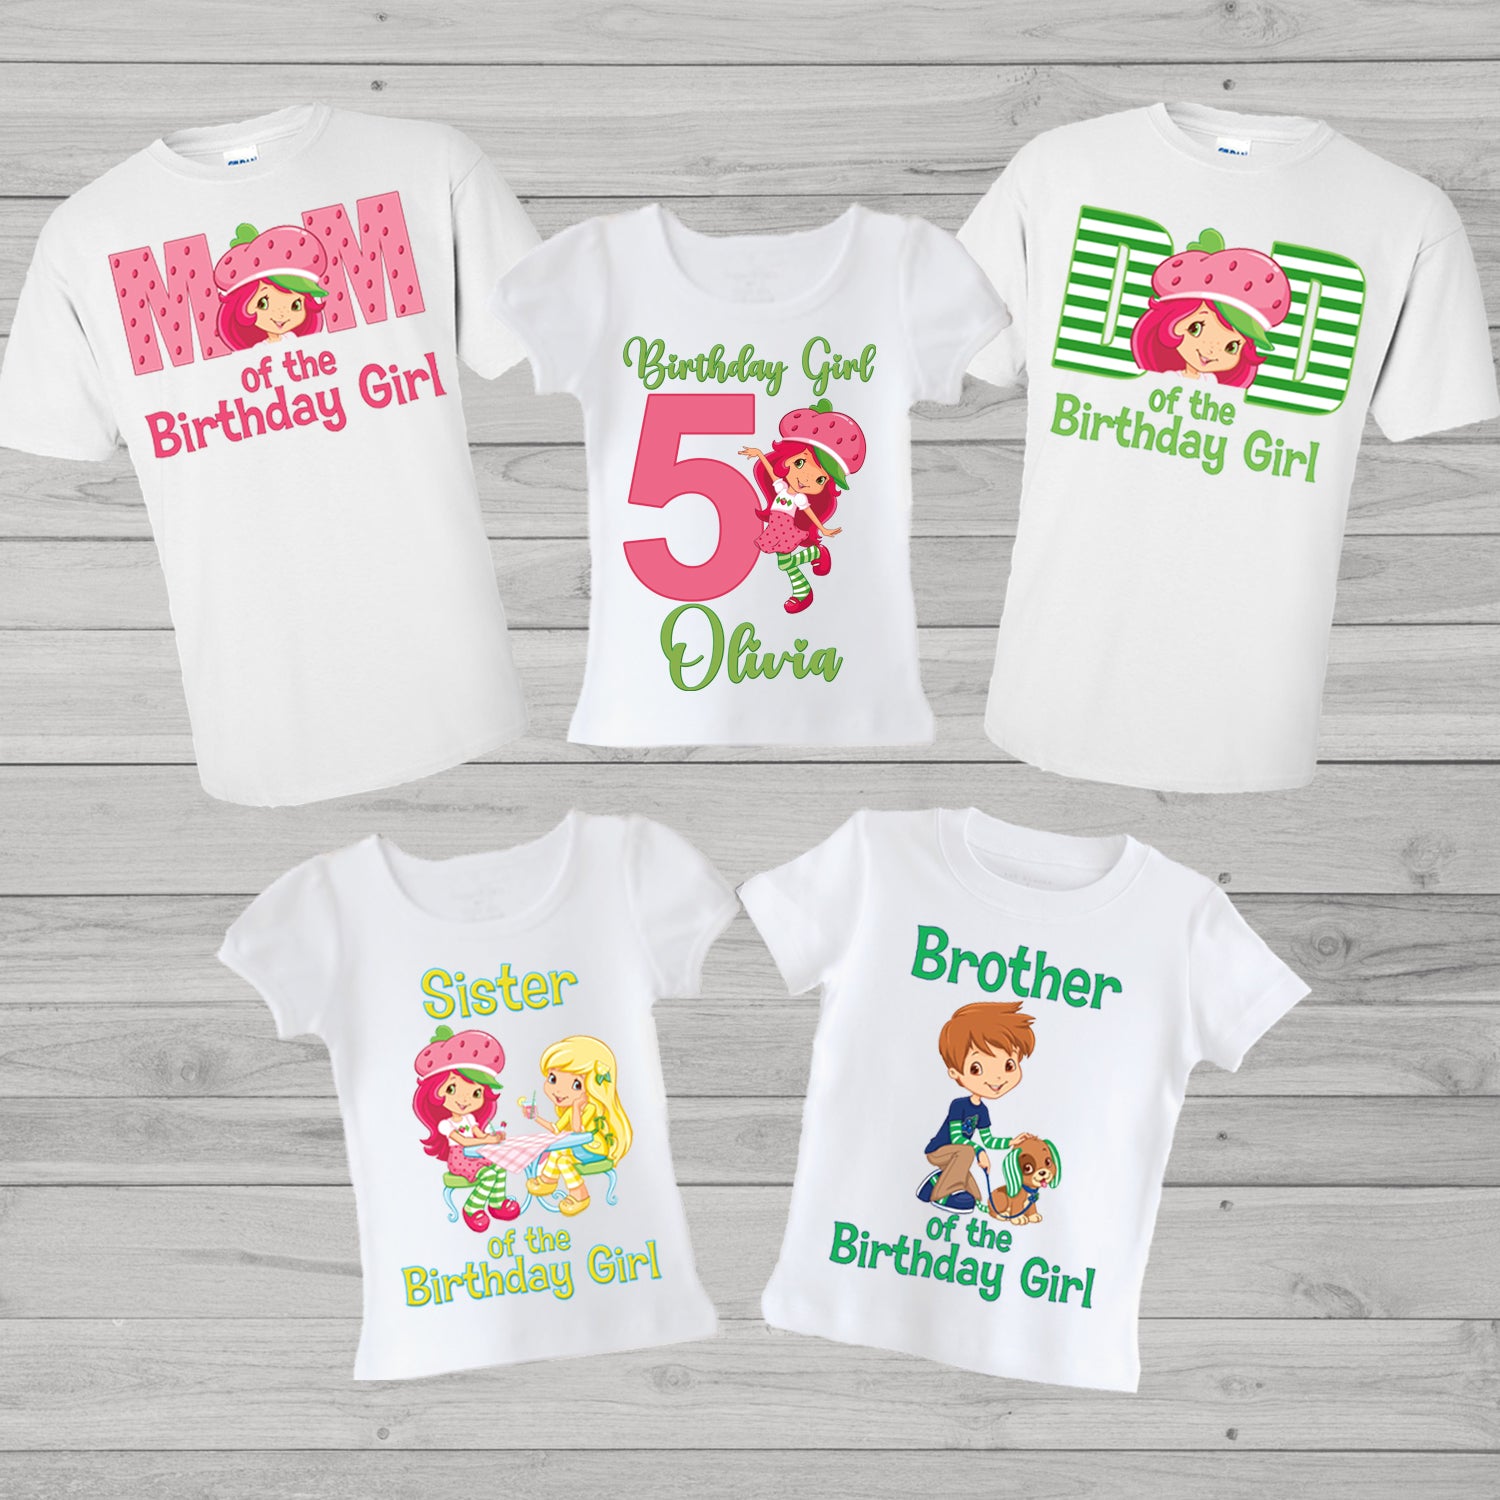 Disney Princess Family Birthday Shirts – Twistin Twirlin Tutus